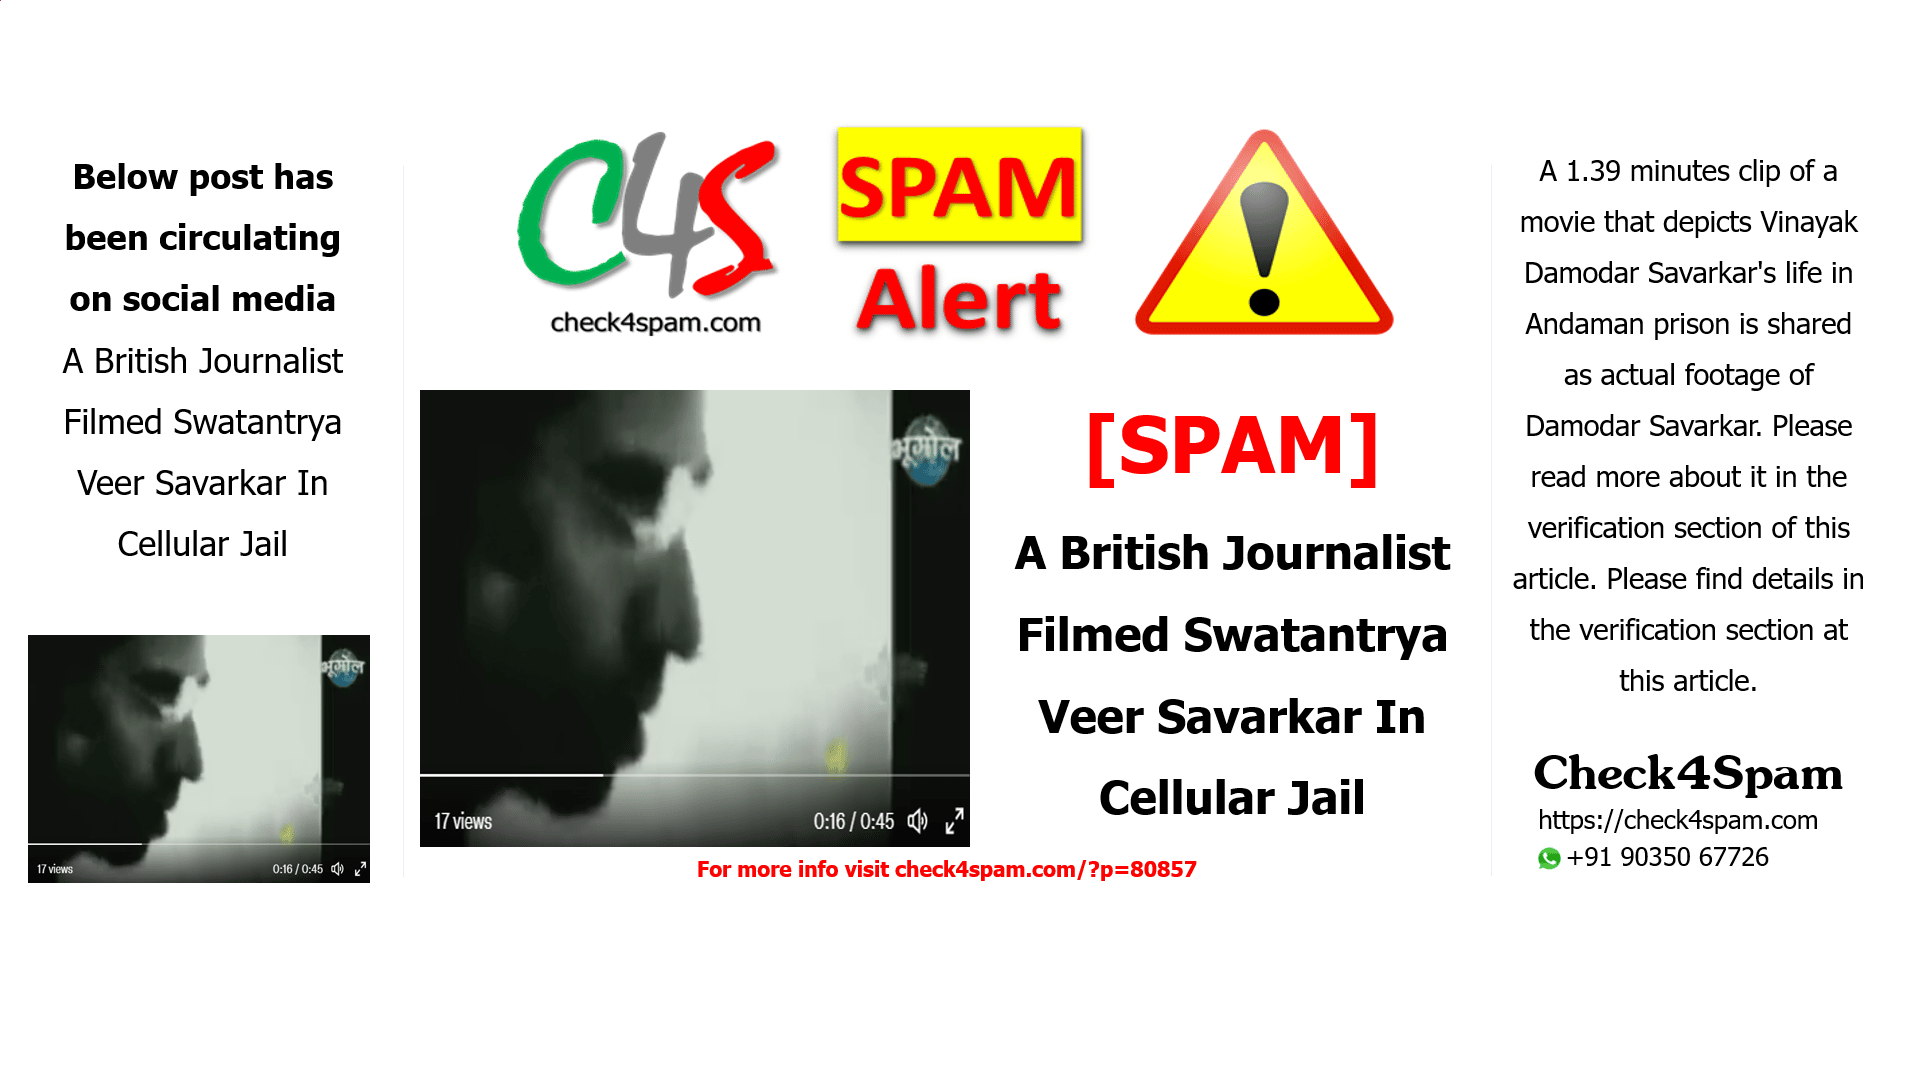 A British Journalist Filmed Swatantrya Veer Savarkar In Cellular Jail